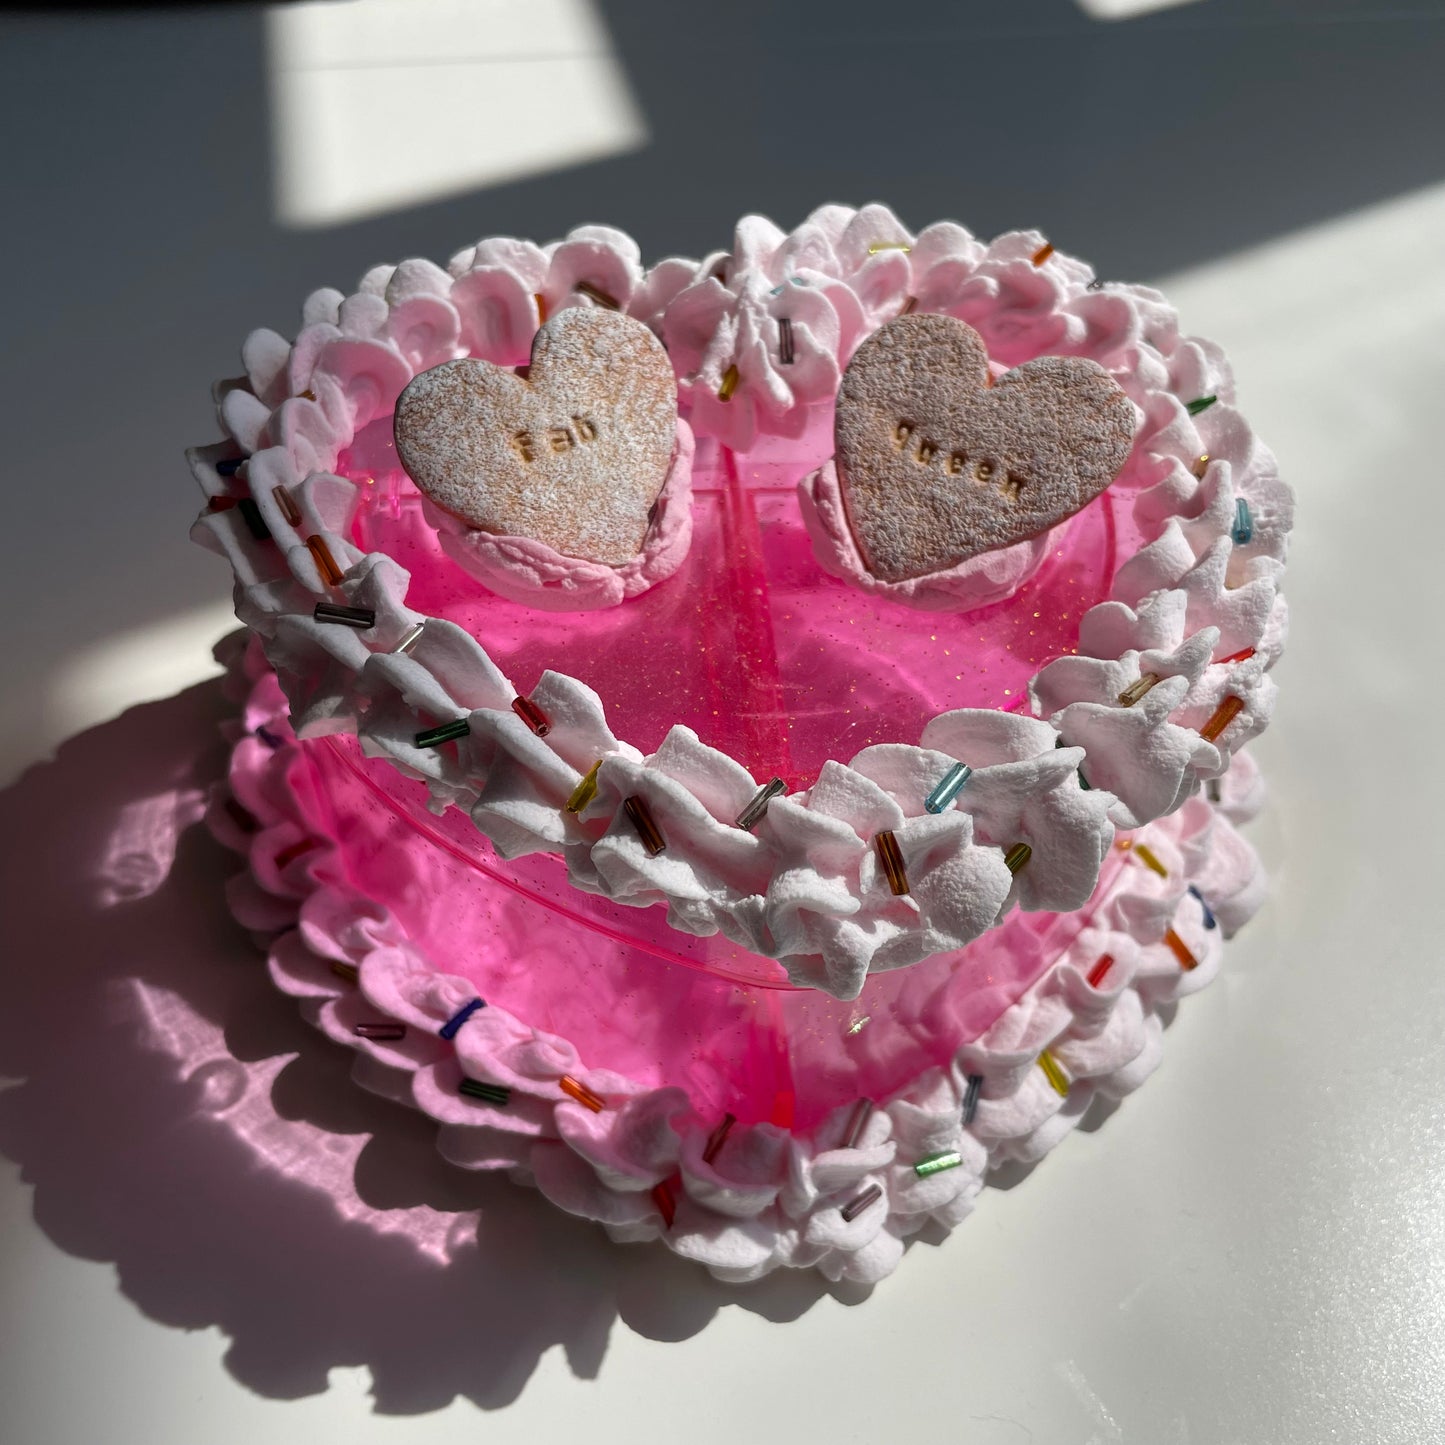 Heart cake trinket box